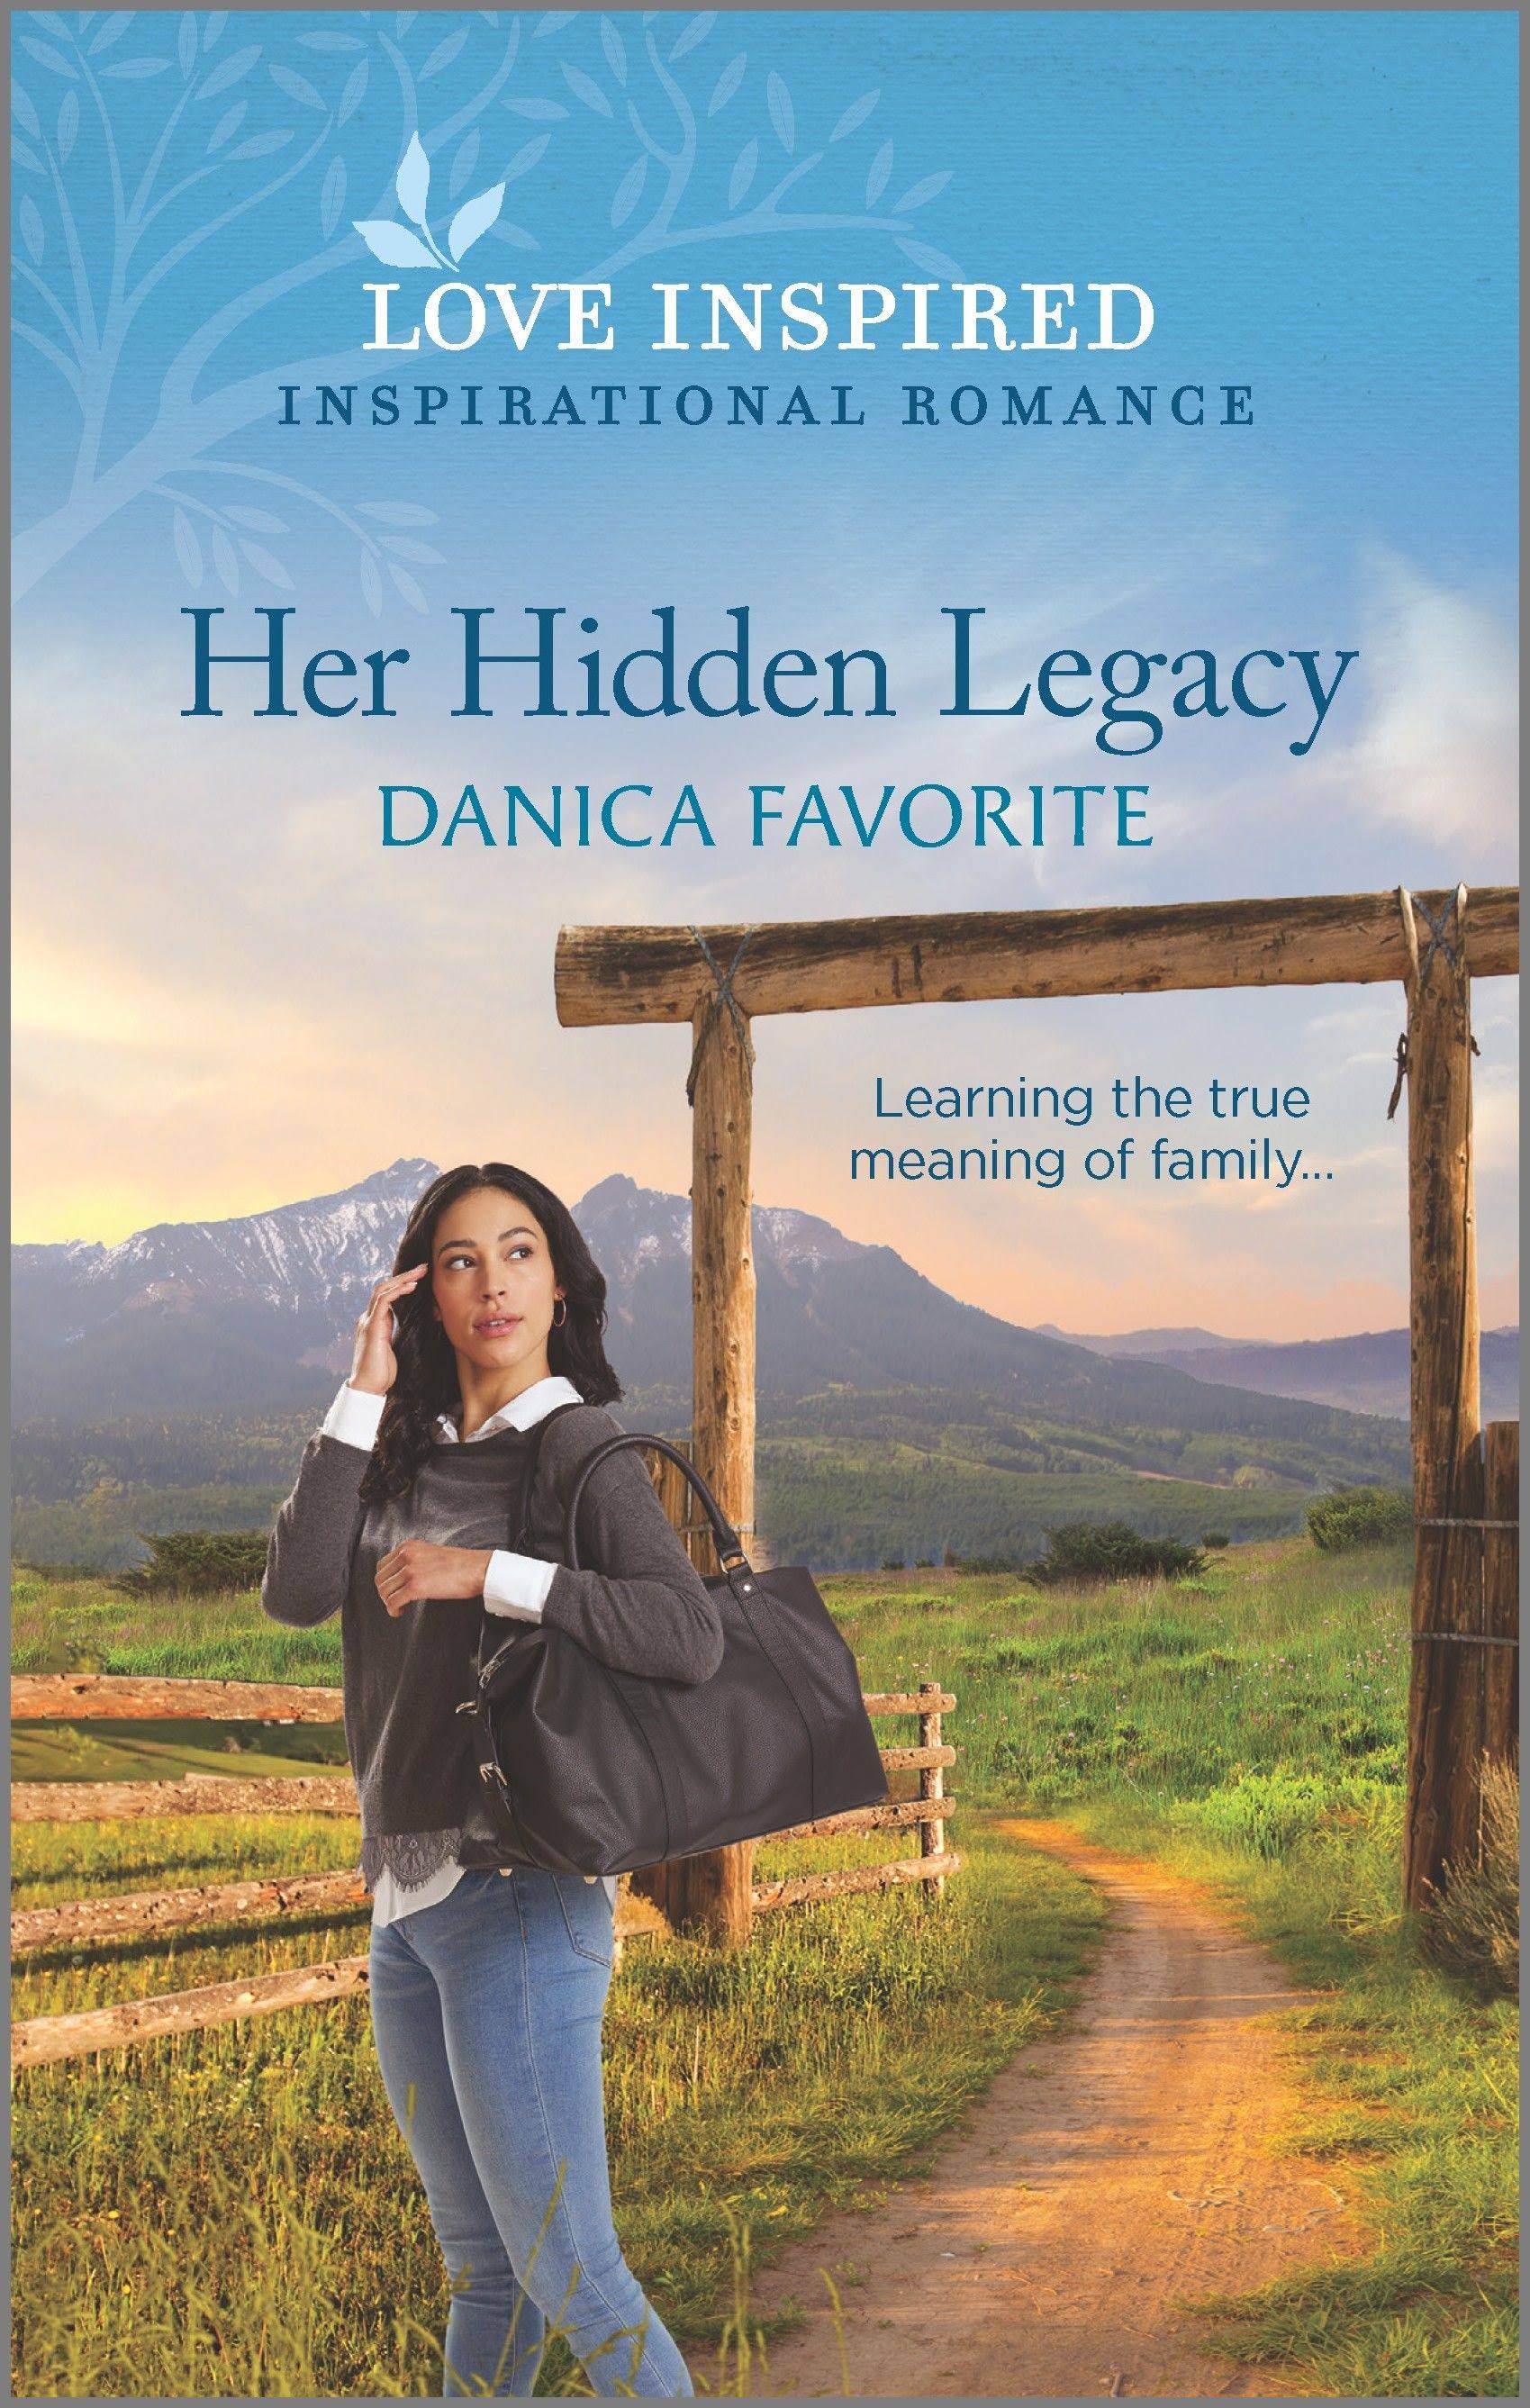 Her Hidden Legacy by Danica Favorite